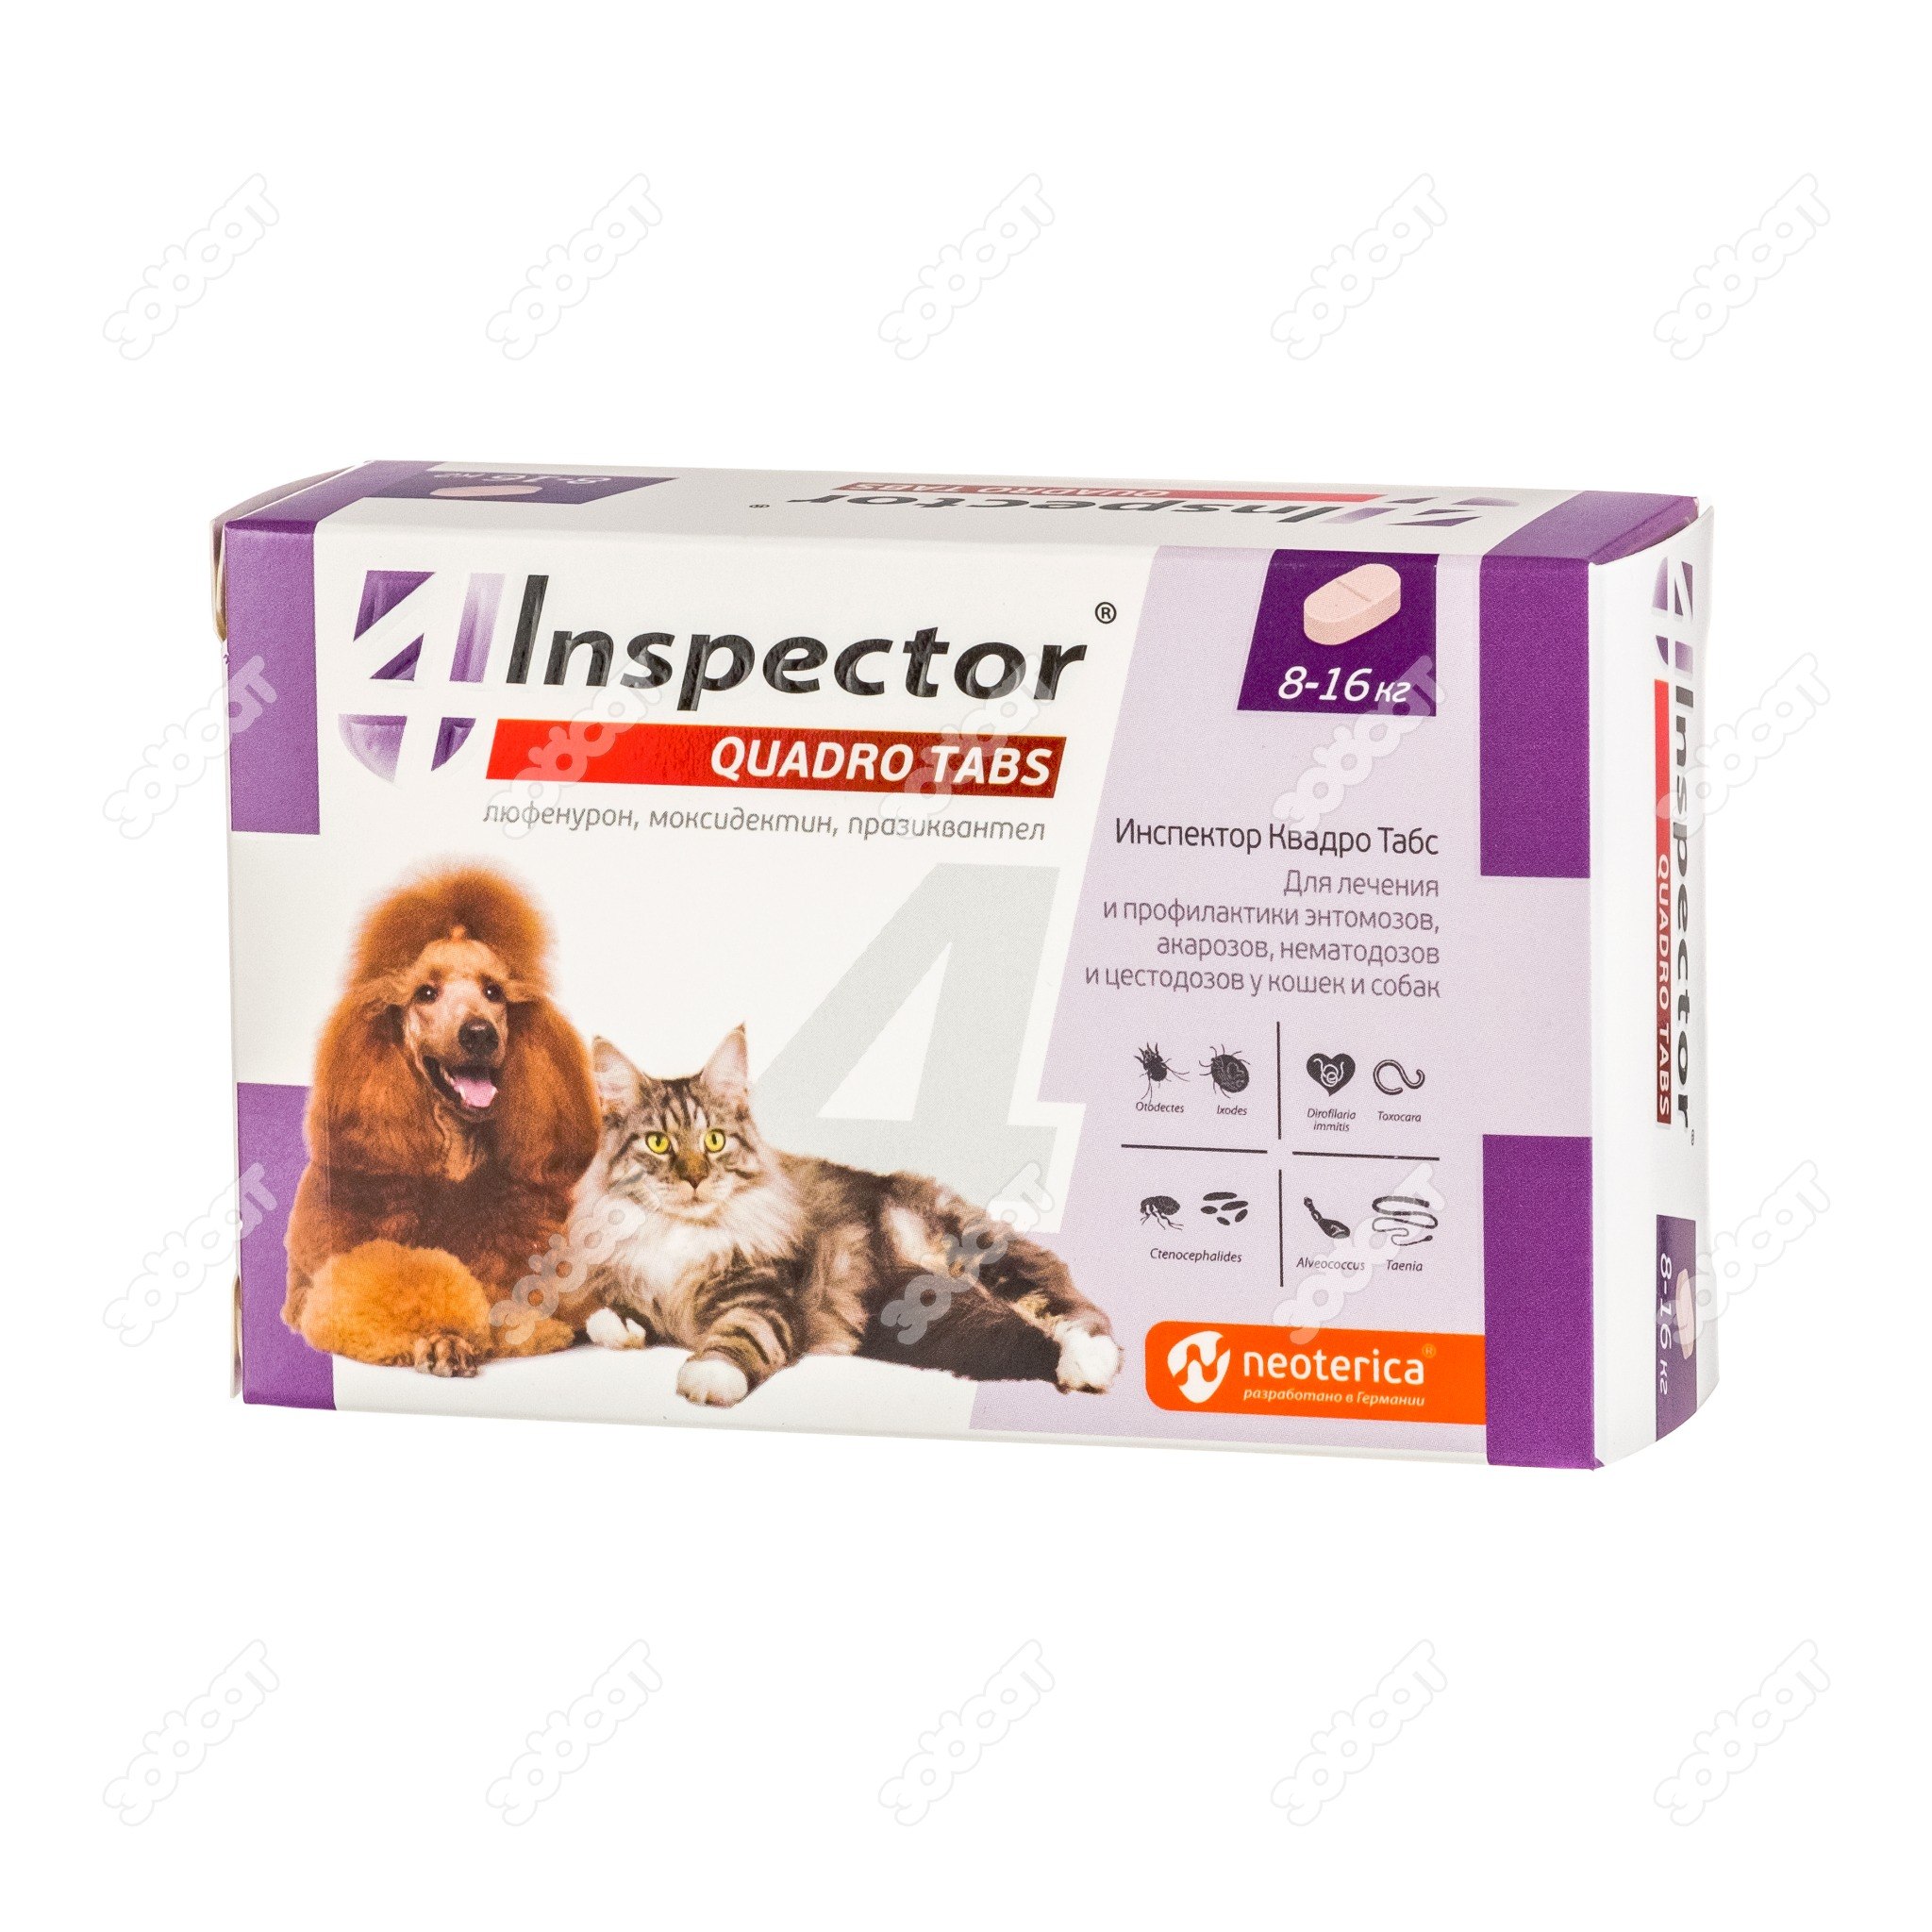 Inspector quadro tabs цены. Инспектор для собак таблетки 2-8 кг. Inspector Quadro таблетки для собак 2-8 кг. Инспектор Квадро табс 8-16 кг для кошек. Инспектор таблетки для собак от 16 кг.